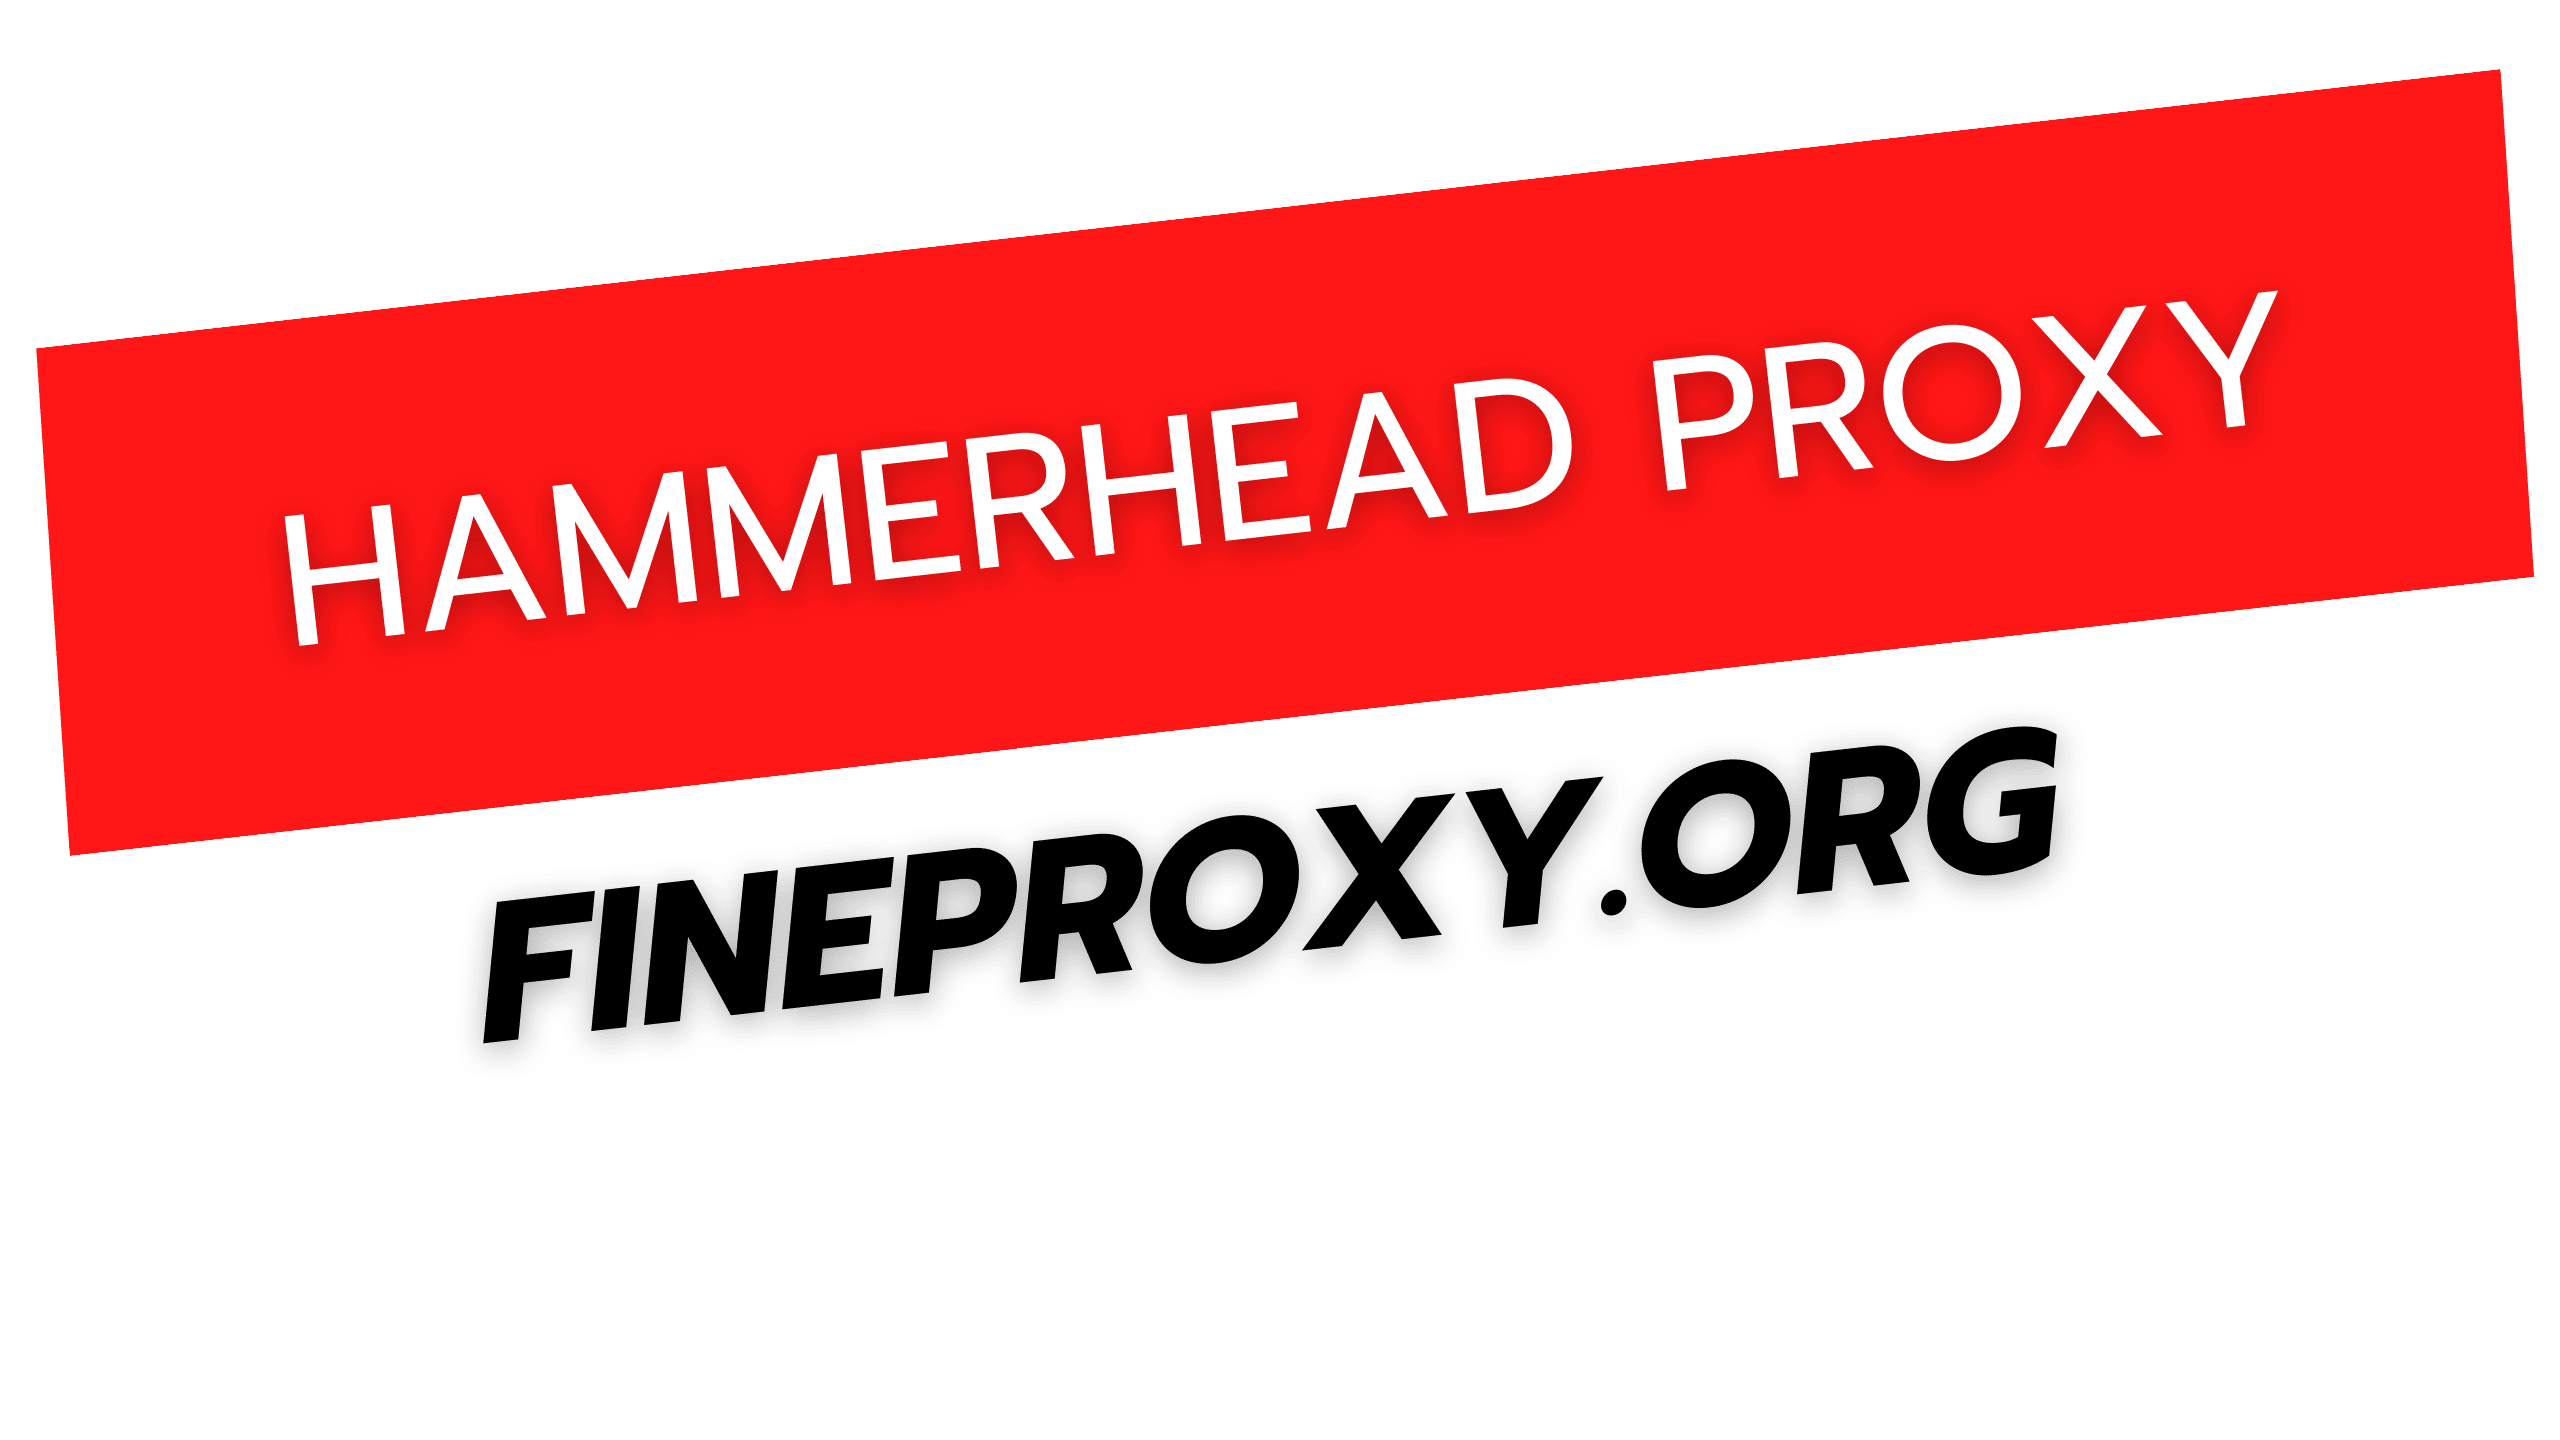 Hammerhead proxy